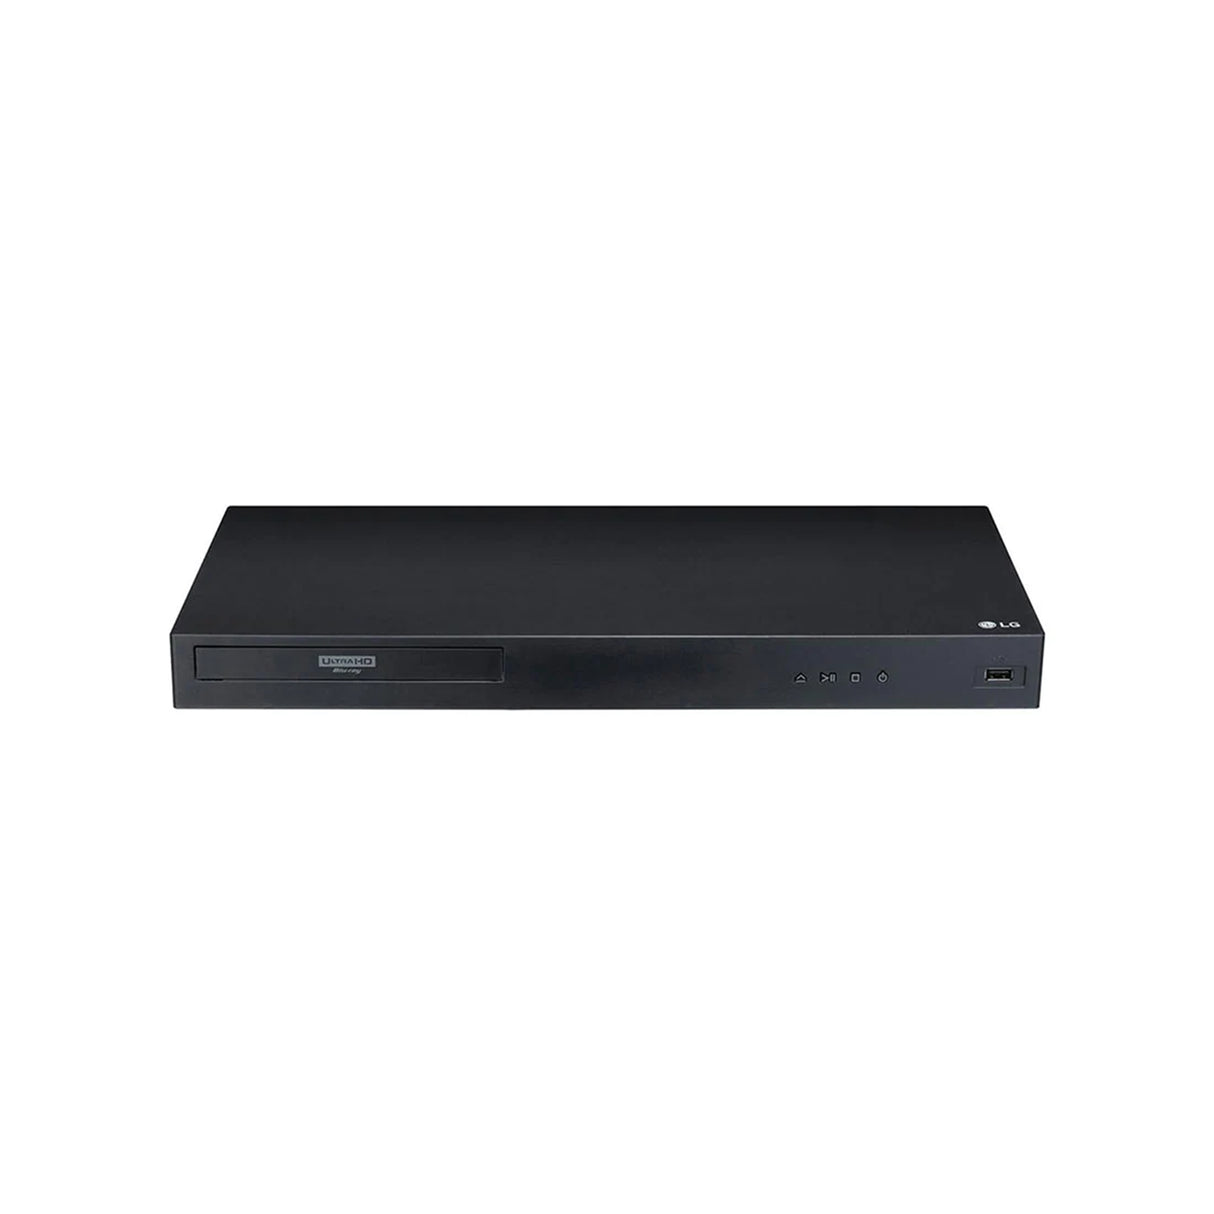 LG UBK80 - Multi Region 4K Ultra HD Blu-Ray Disc Player